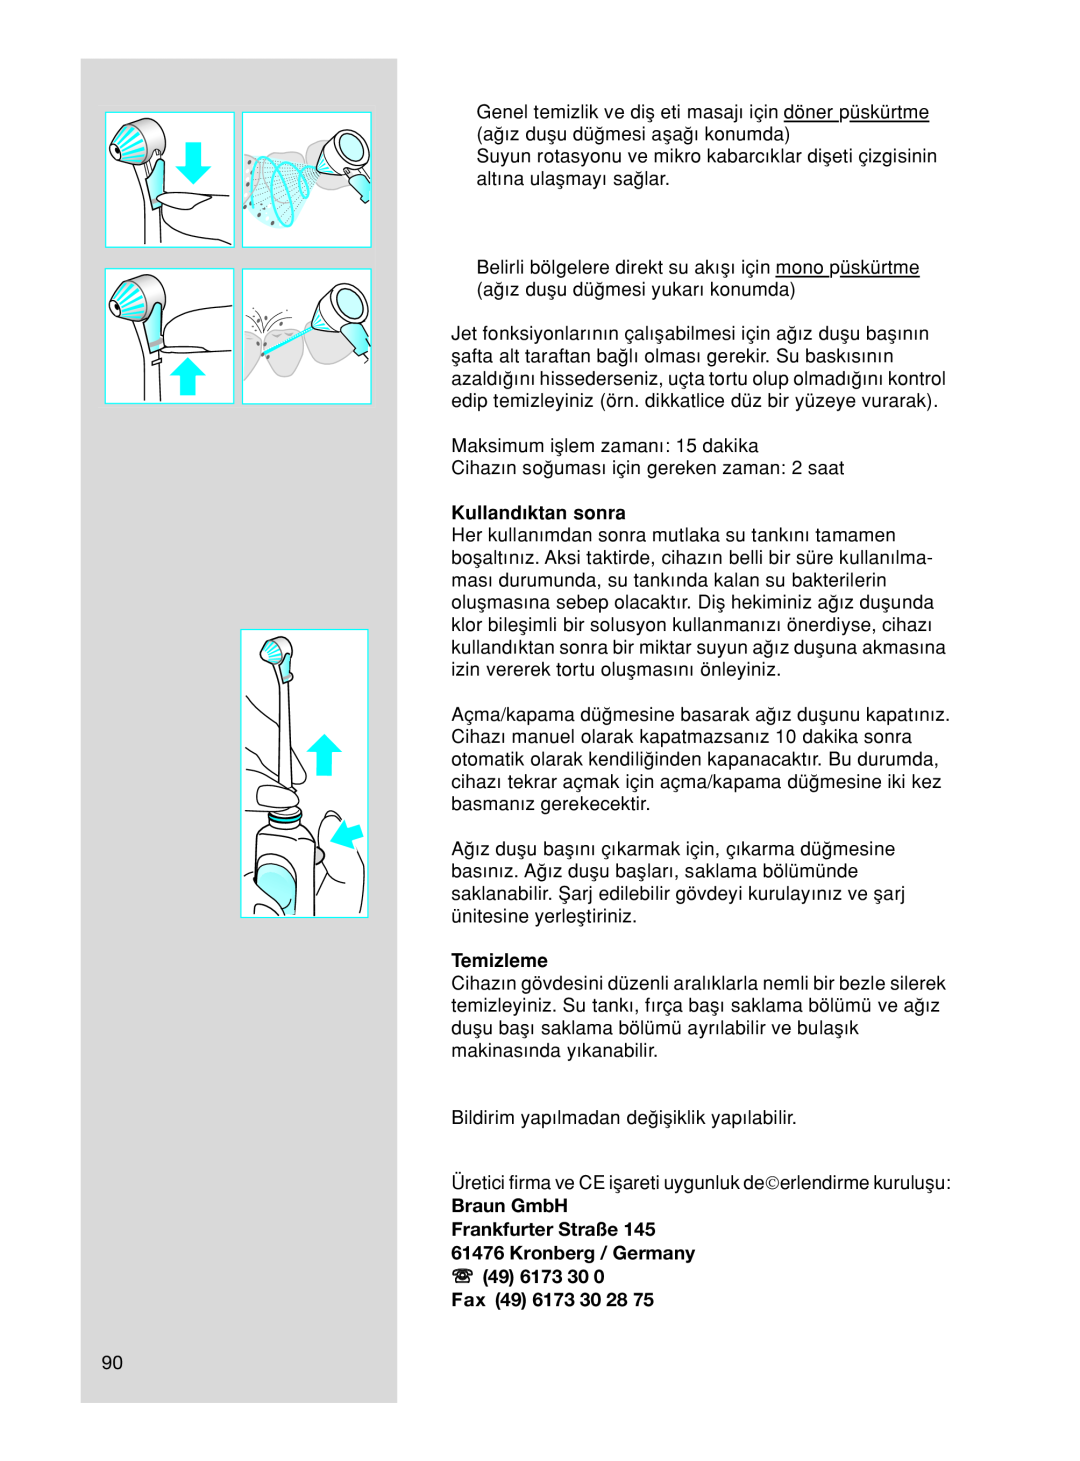 Braun OC 17545X manual Kulland∂ktan sonra, Temizleme, Braun GmbH Frankfurter Straße 61476 Kronberg / Germany “ 49 6173 30 